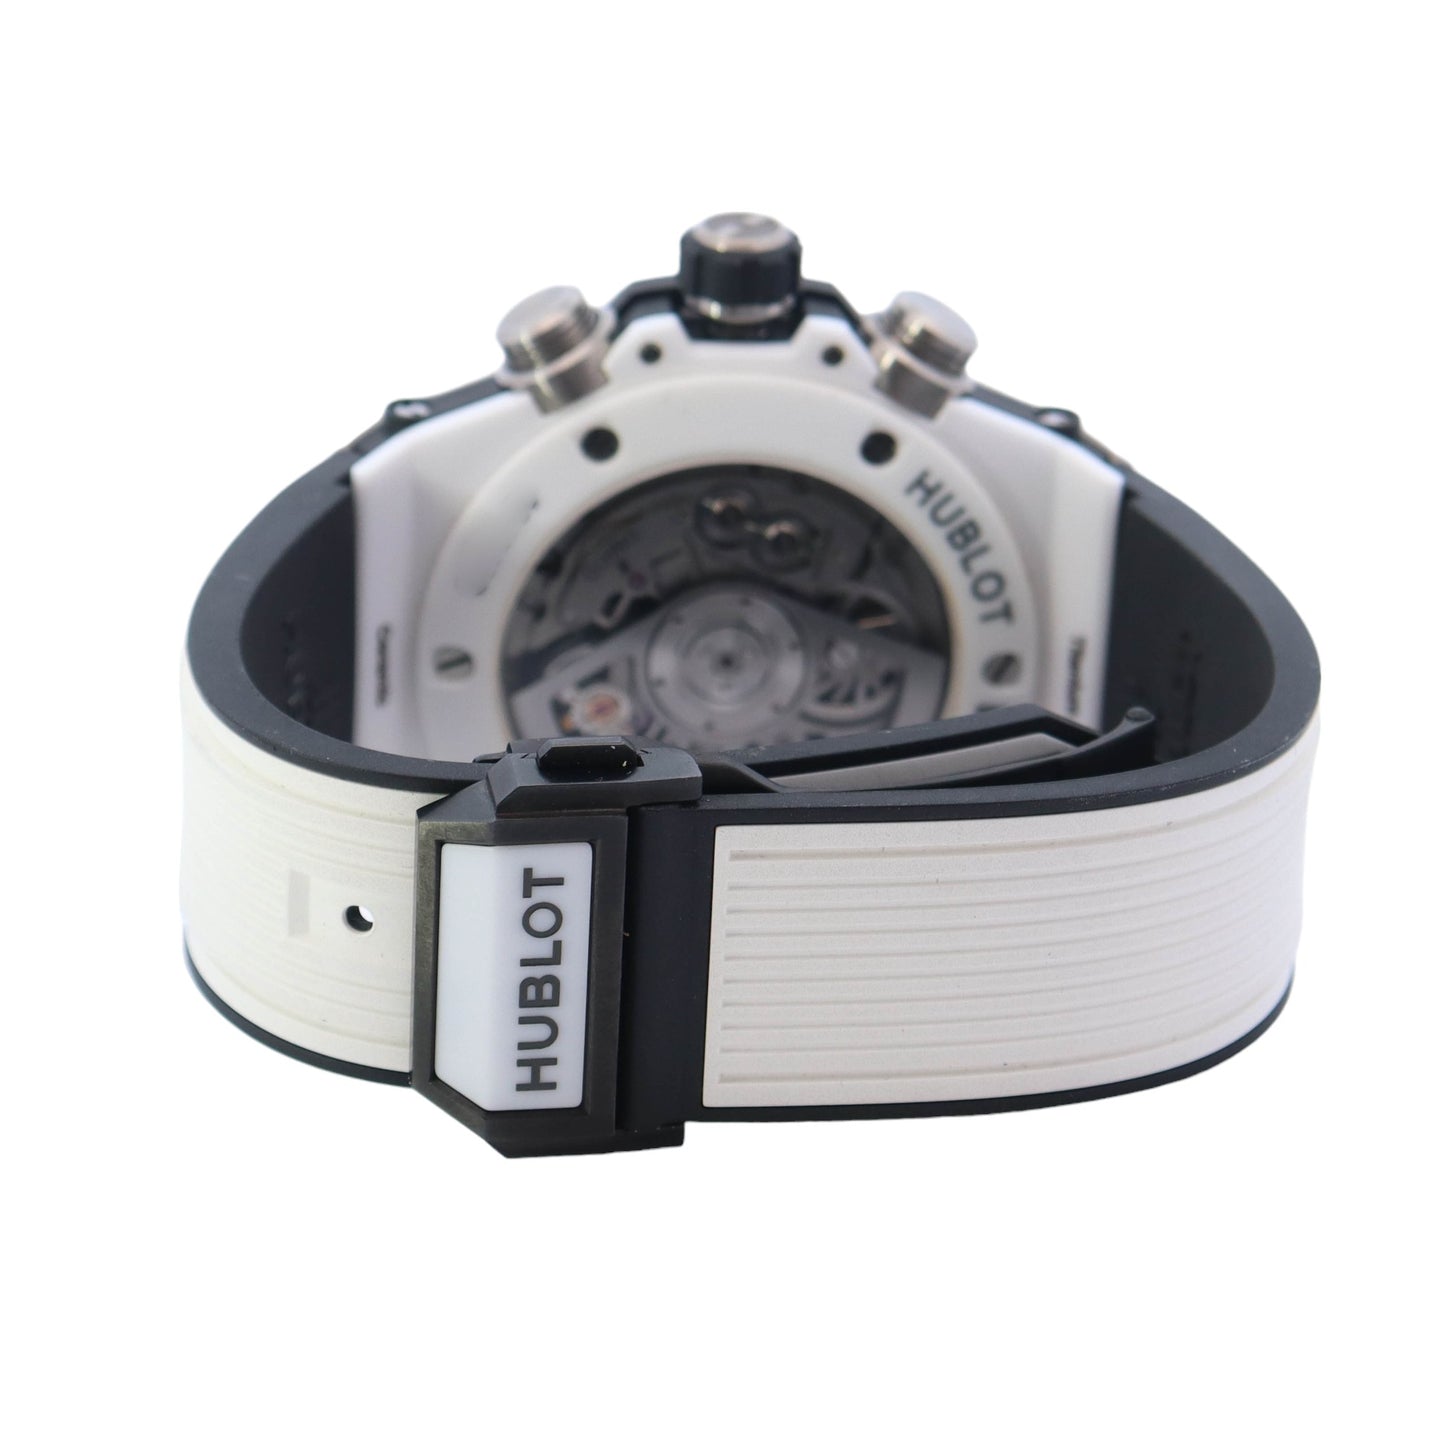 Hublot Big Bang Unico White Ceramic 45mm Skeleton Arabic & Stick Dial Watch Reference# 411.HX.1170.RX - Happy Jewelers Fine Jewelry Lifetime Warranty